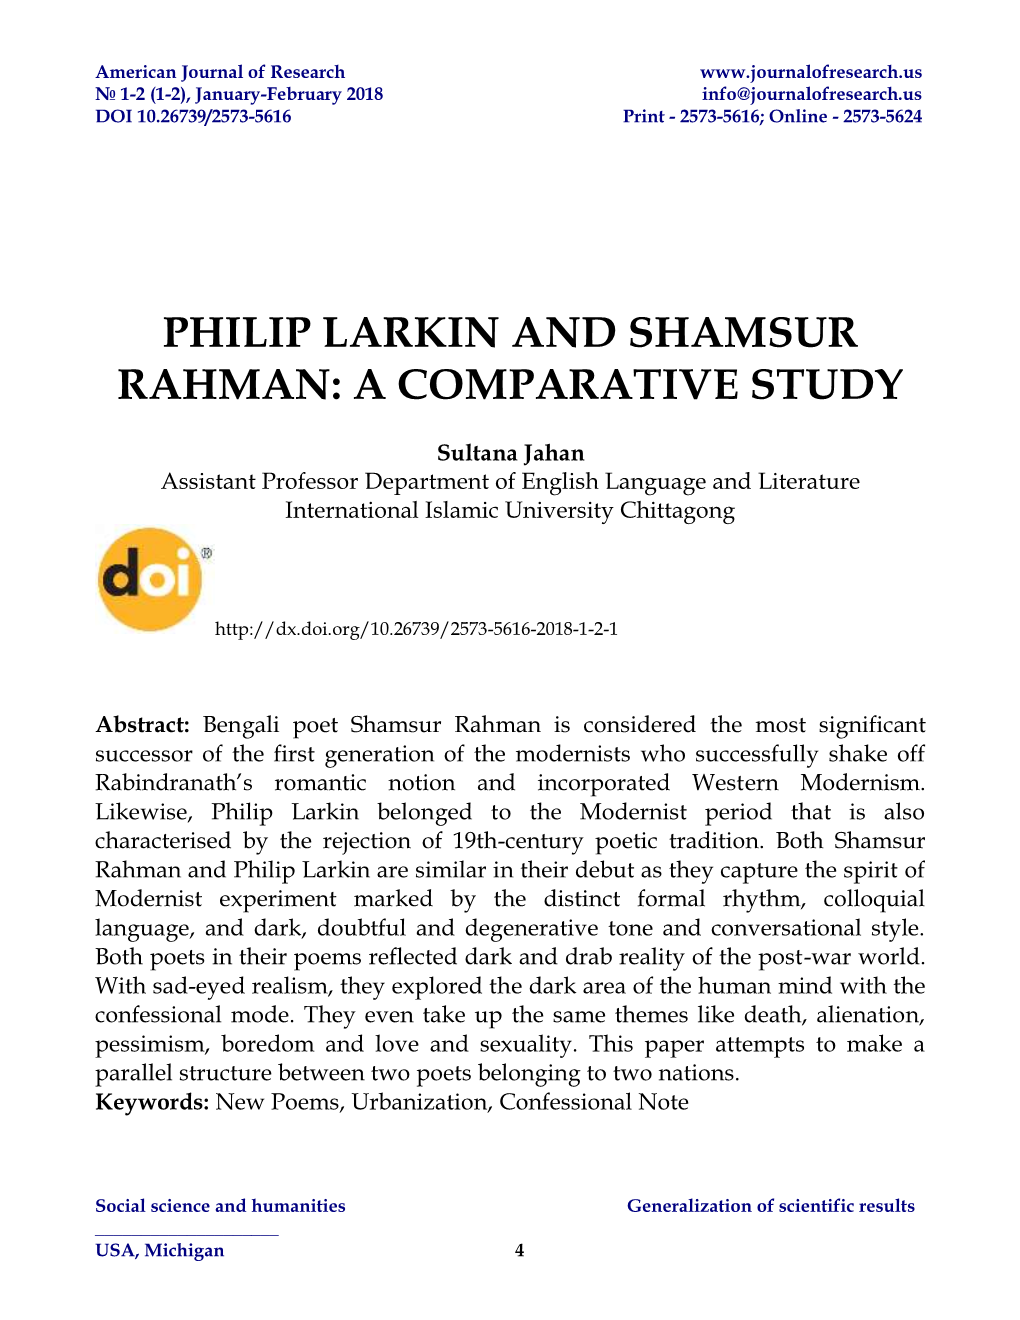 Philip Larkin and Shamsur Rahman: a Comparative Study